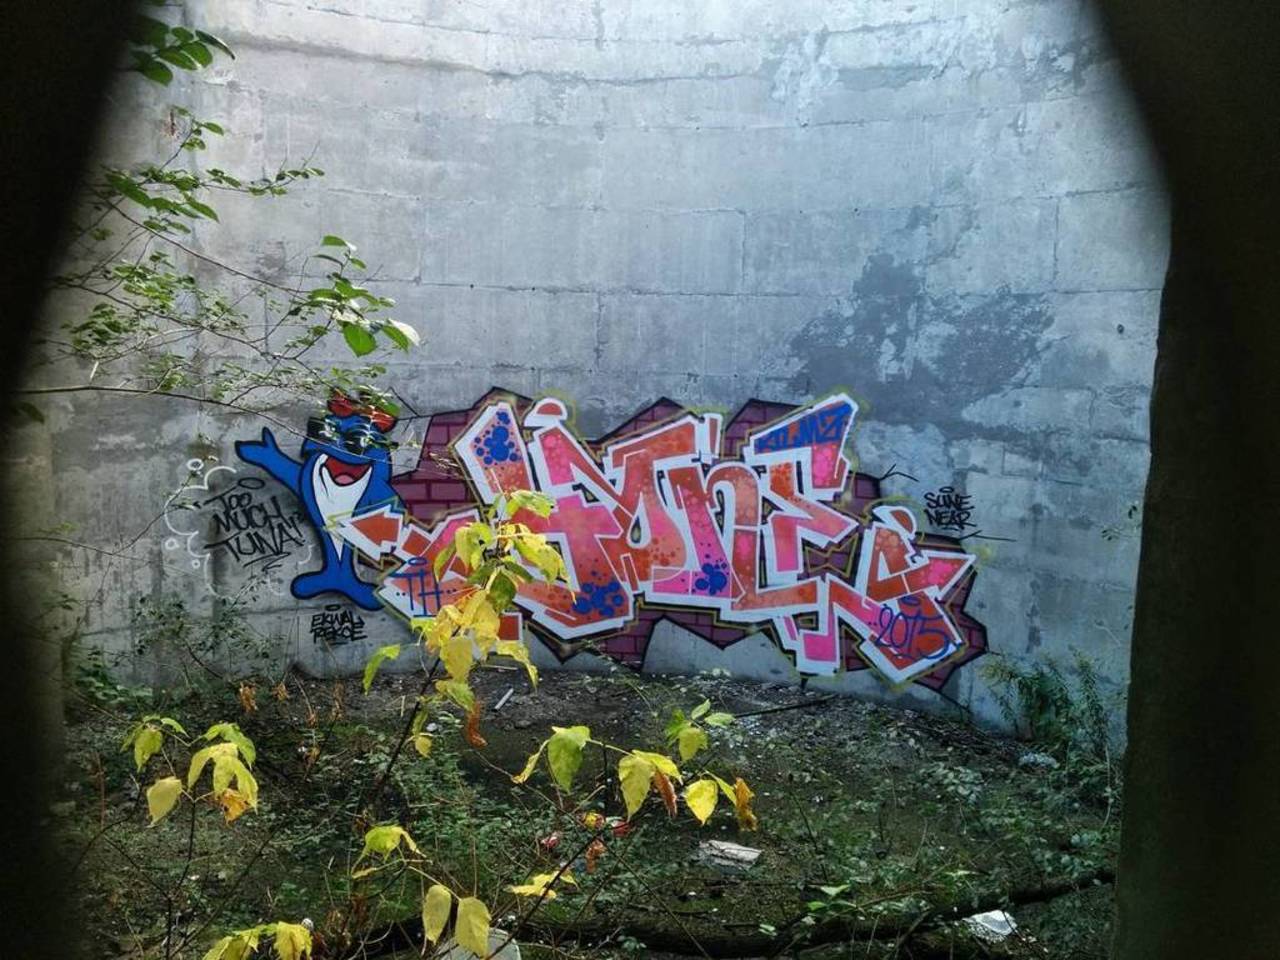 RT @_m4tth3w_: #Toronto #streetart #graffiti #art #tdot #urban #urbanexploration http://ift.tt/1NhSXdX http://t.co/NgtYx7Ckeh